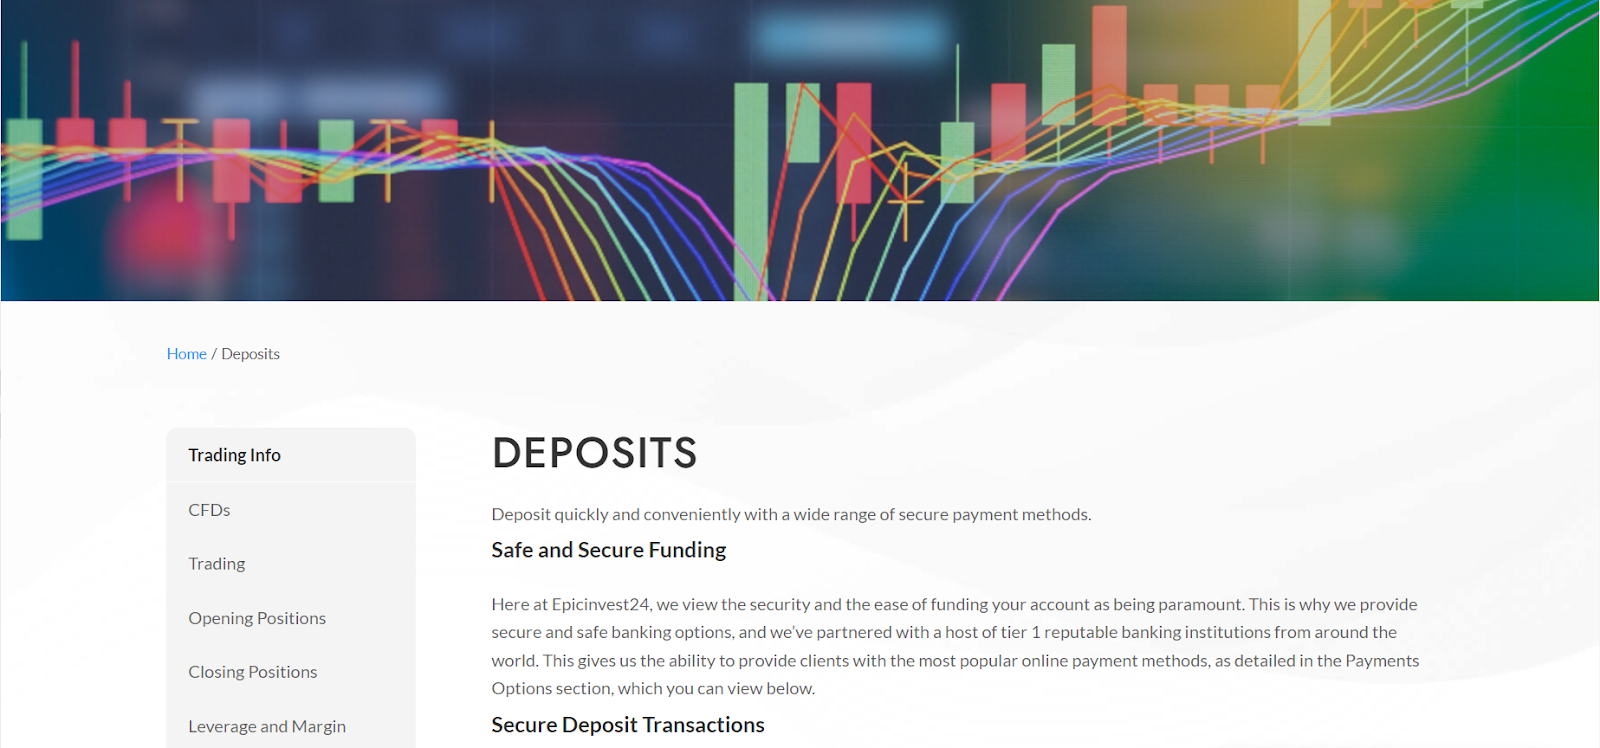 Epicinvest24 deposit methods